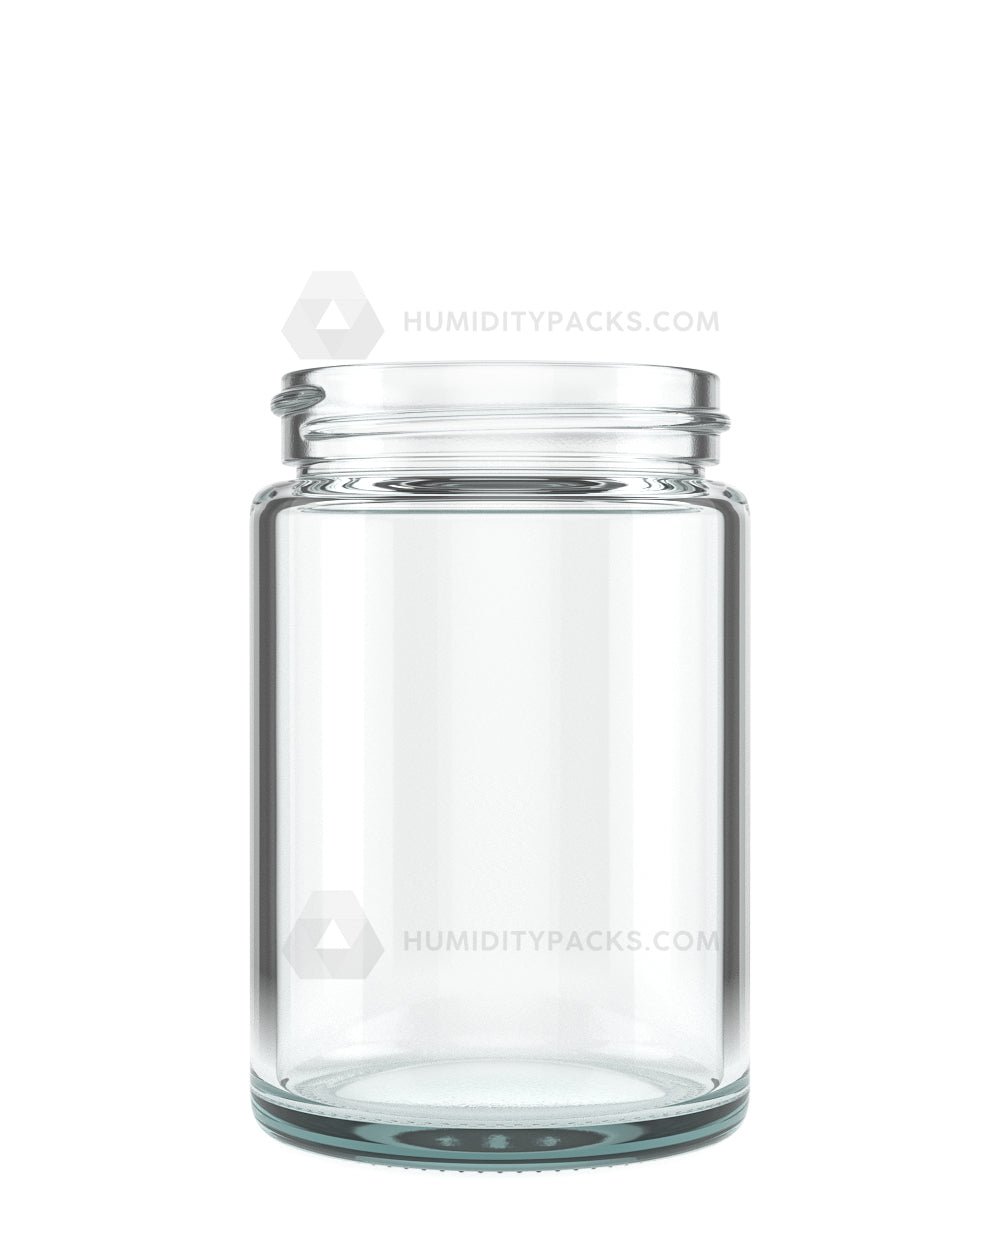 50mm Straight Sided Clear 5oz Glass Jar 100/Box Humidity Packs - 1